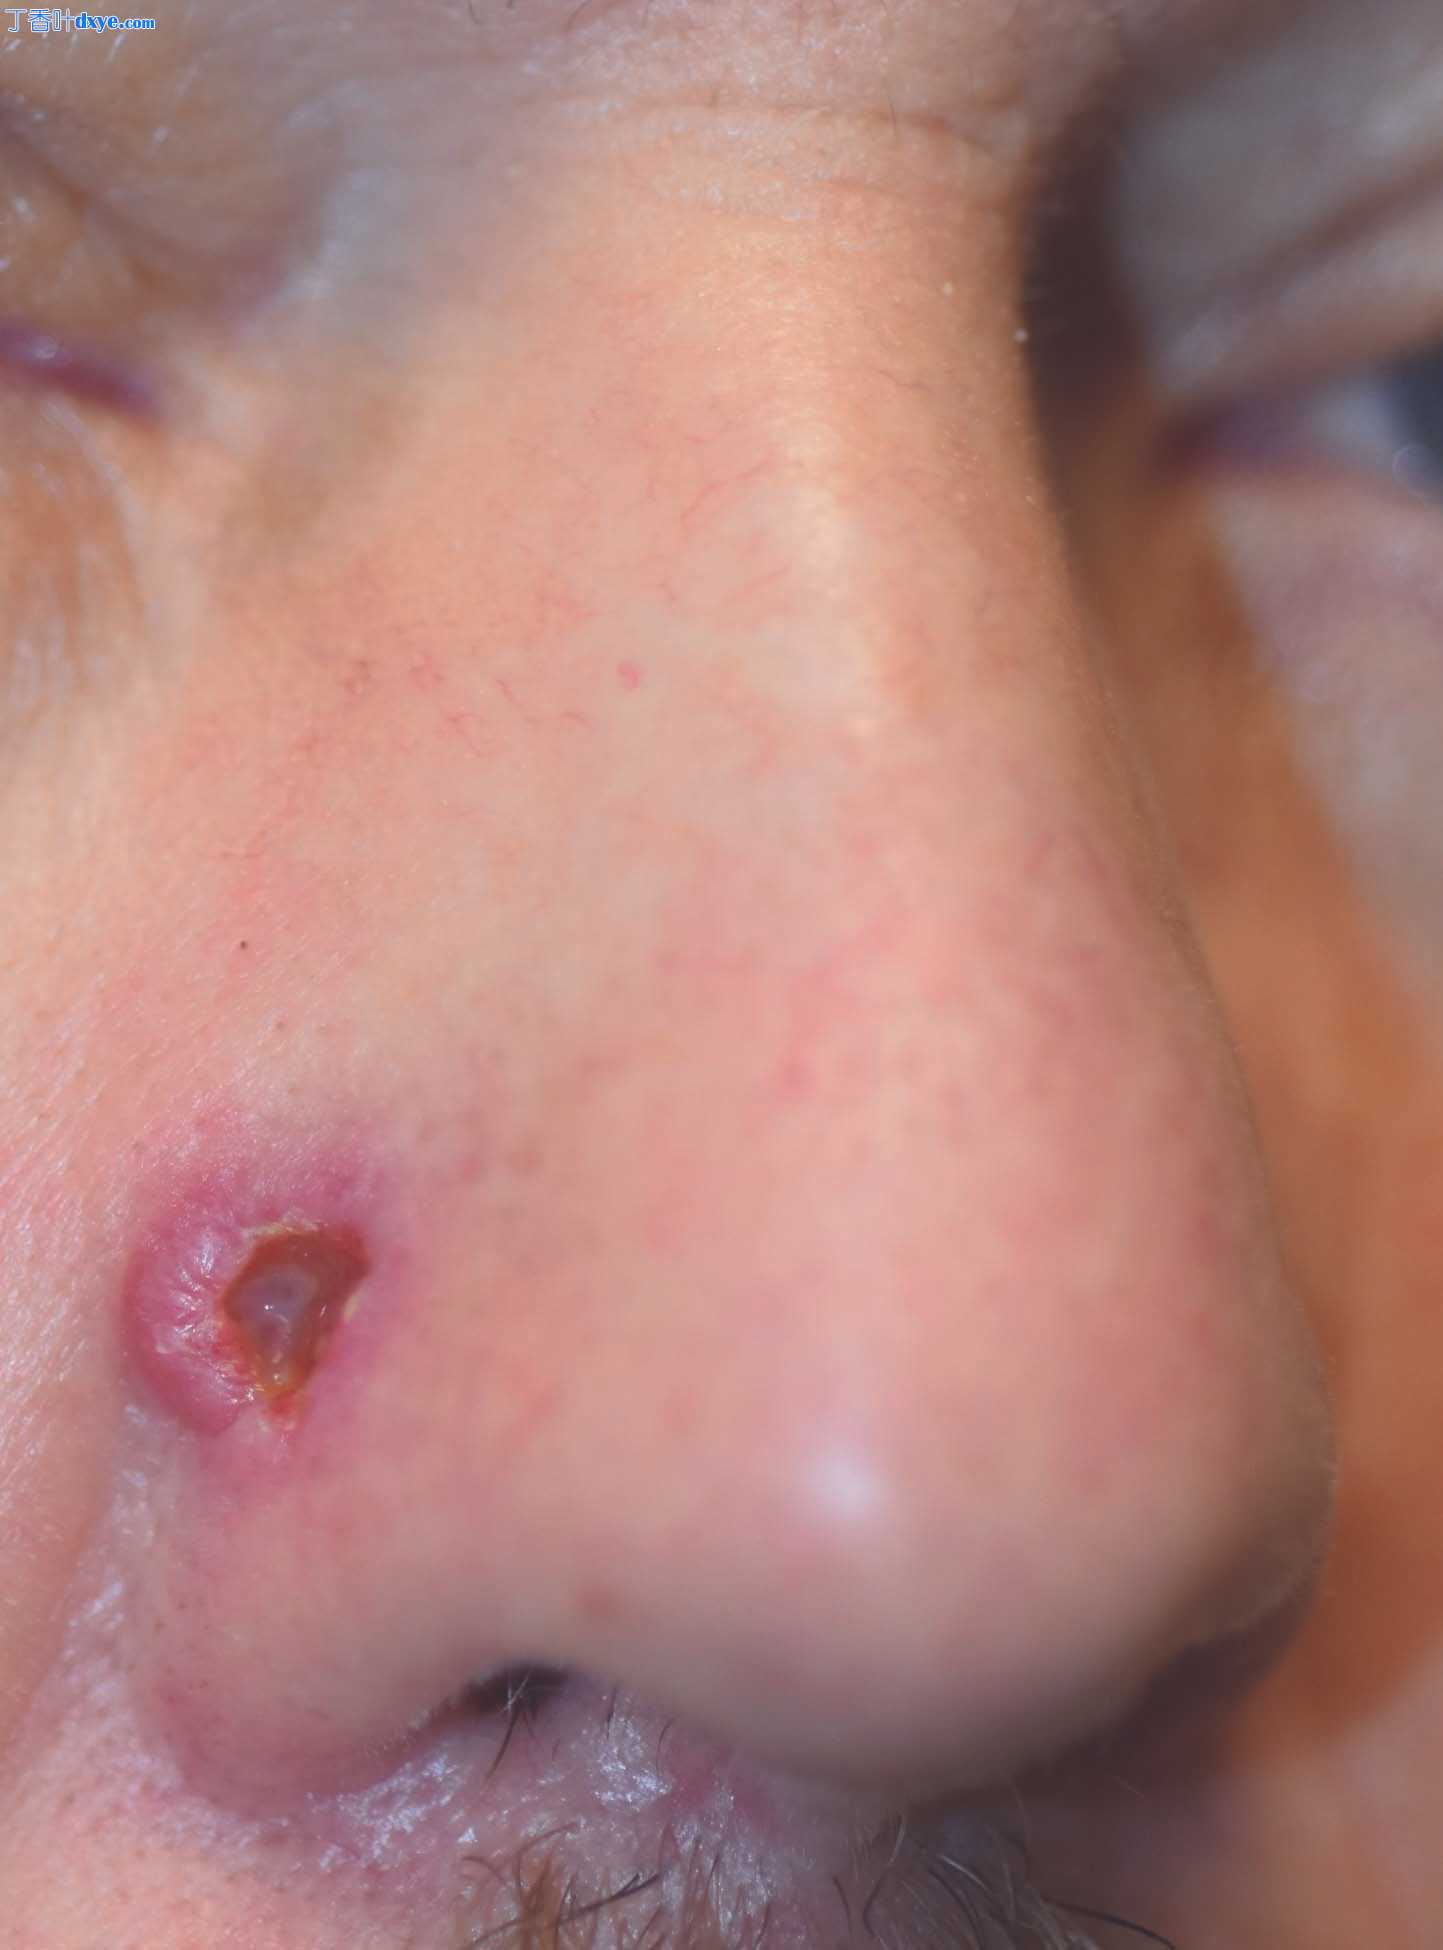 Keystone皮瓣重建下唇基底细胞癌切除术